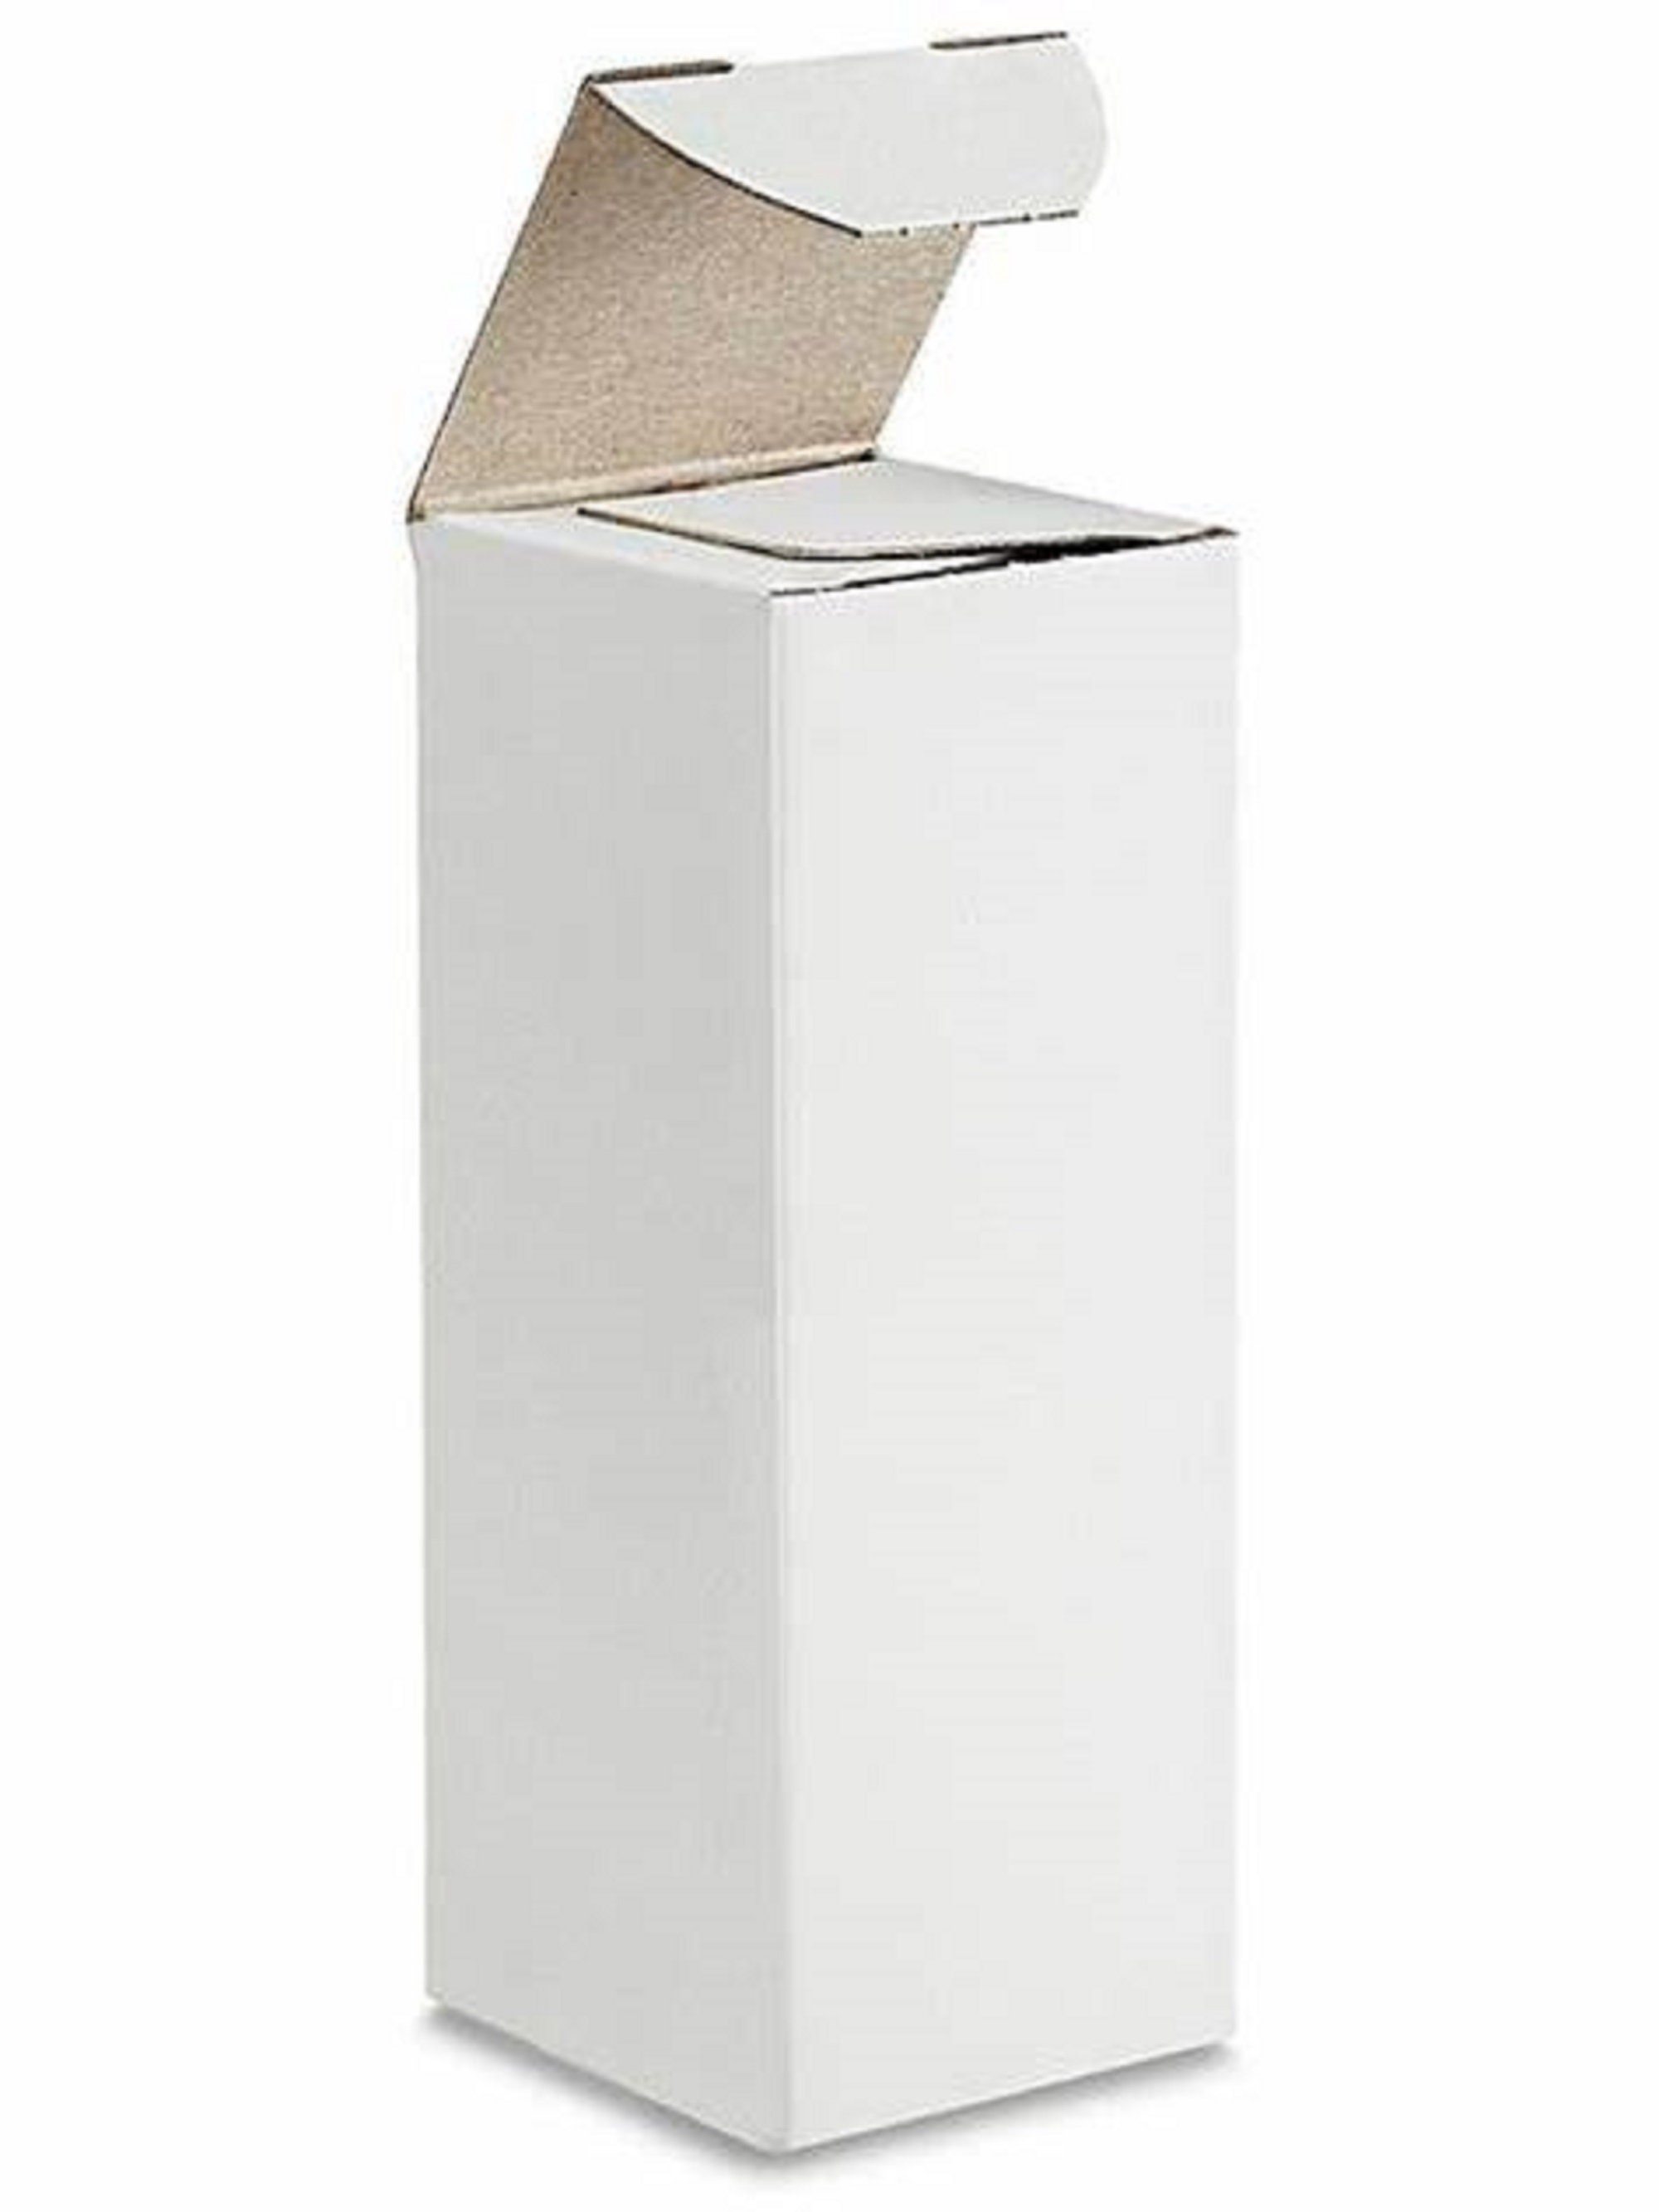 4 x 4 x 6 White Reverse Tuck Folding Carton (250/case) - The Box Guy